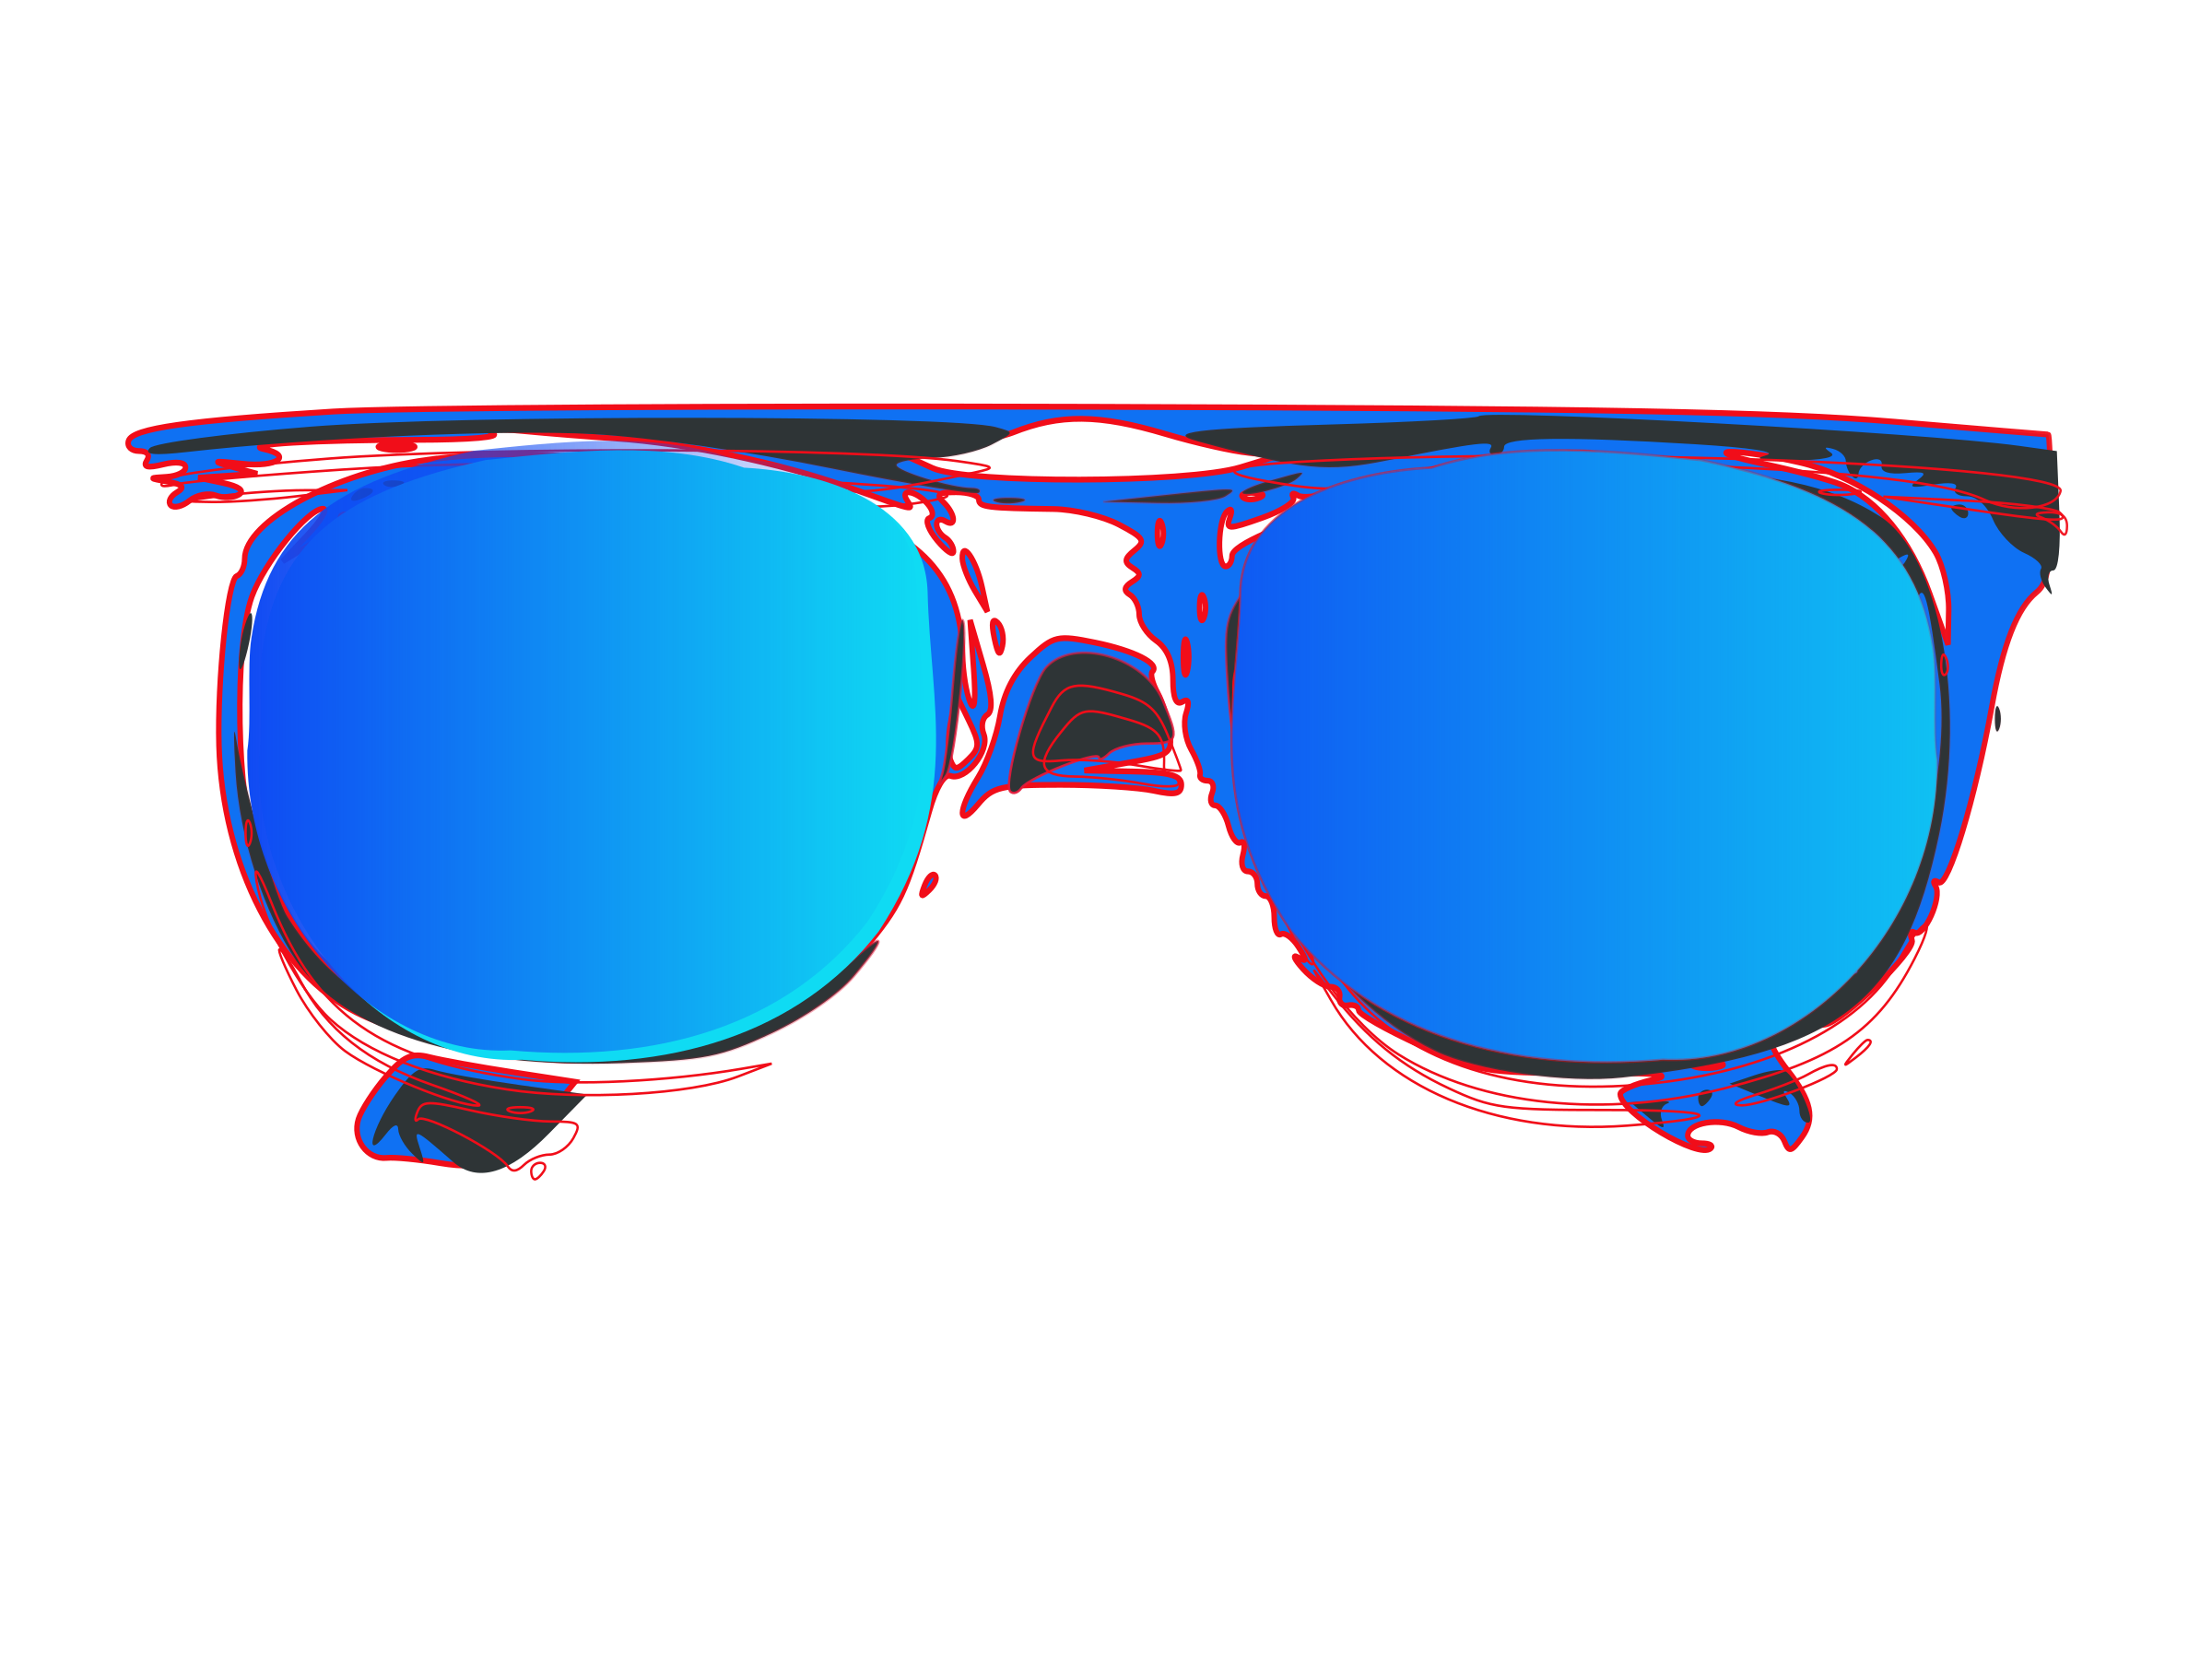 Clipart - sunglasses